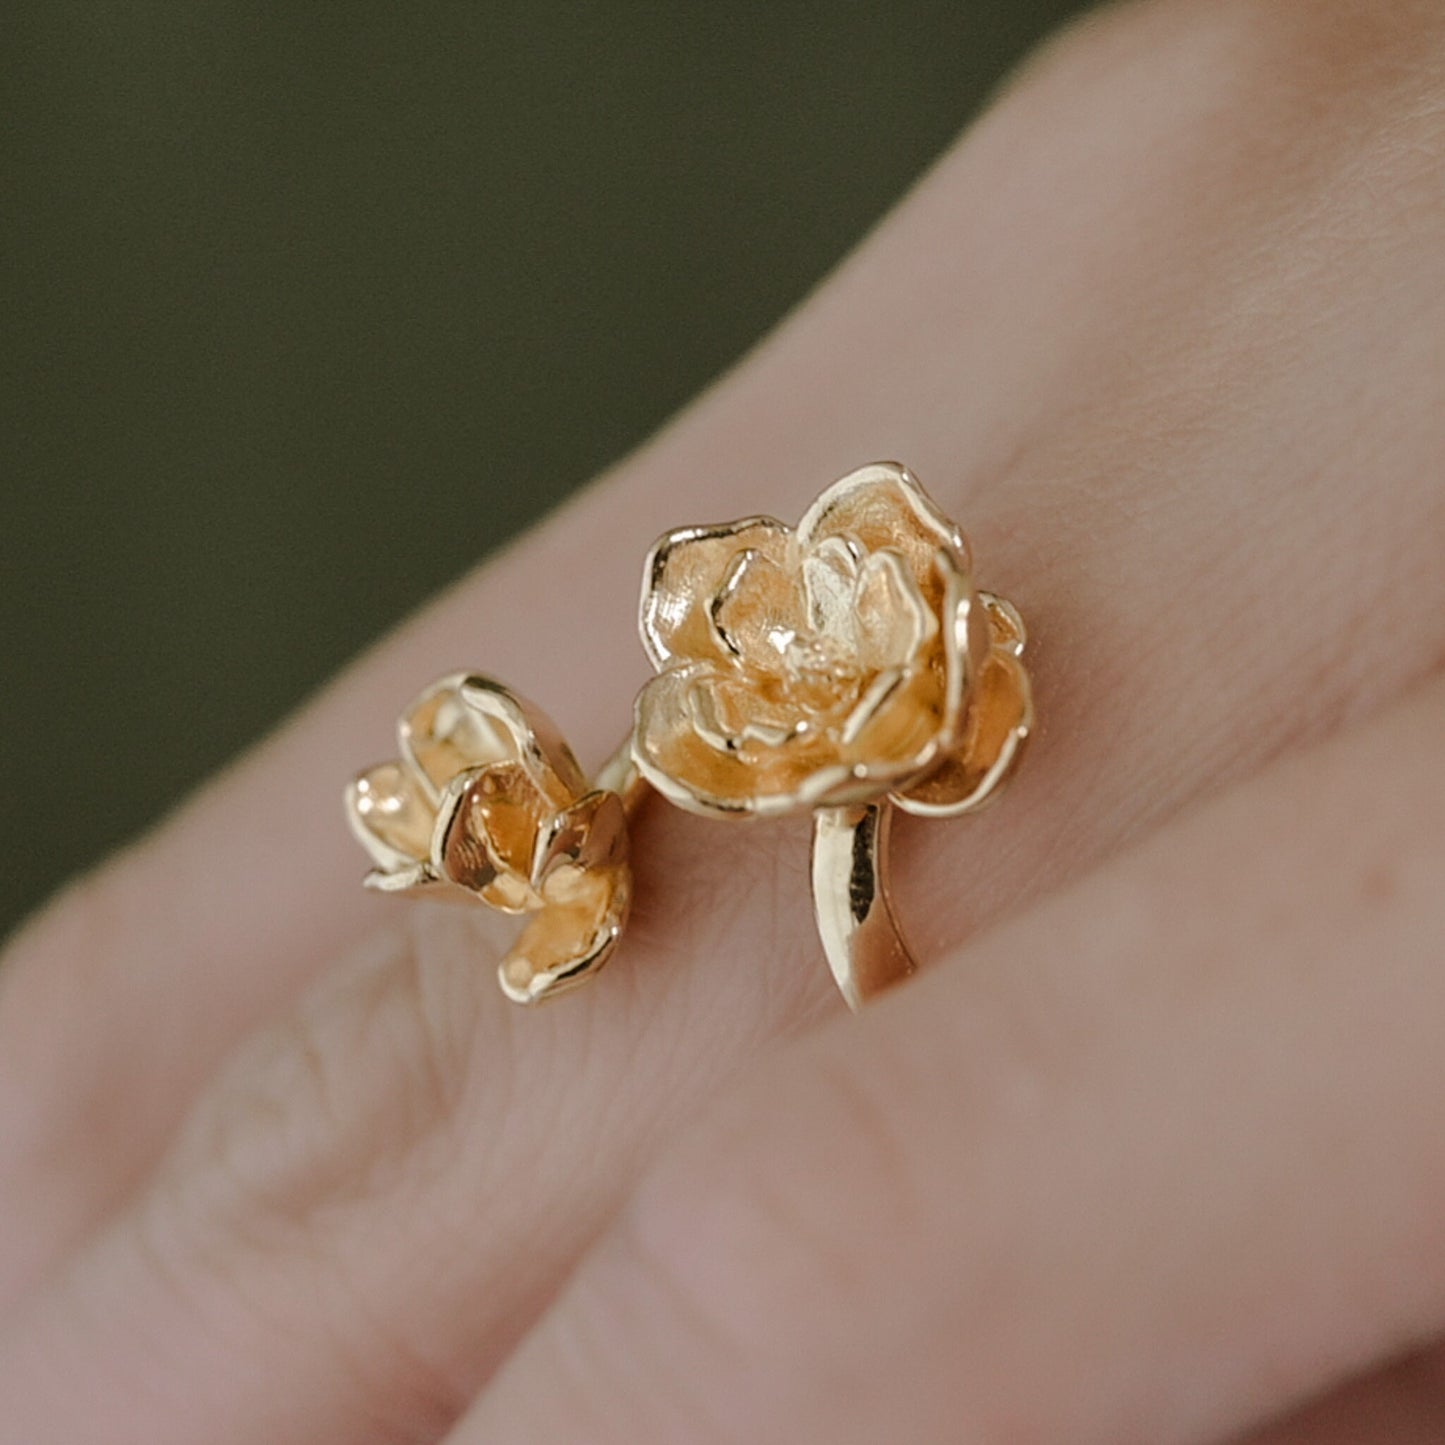 Magnolia Flower Ring, Adjustable Statement Ring in Sterling Silver, Vermeil, 18K Gold Plate